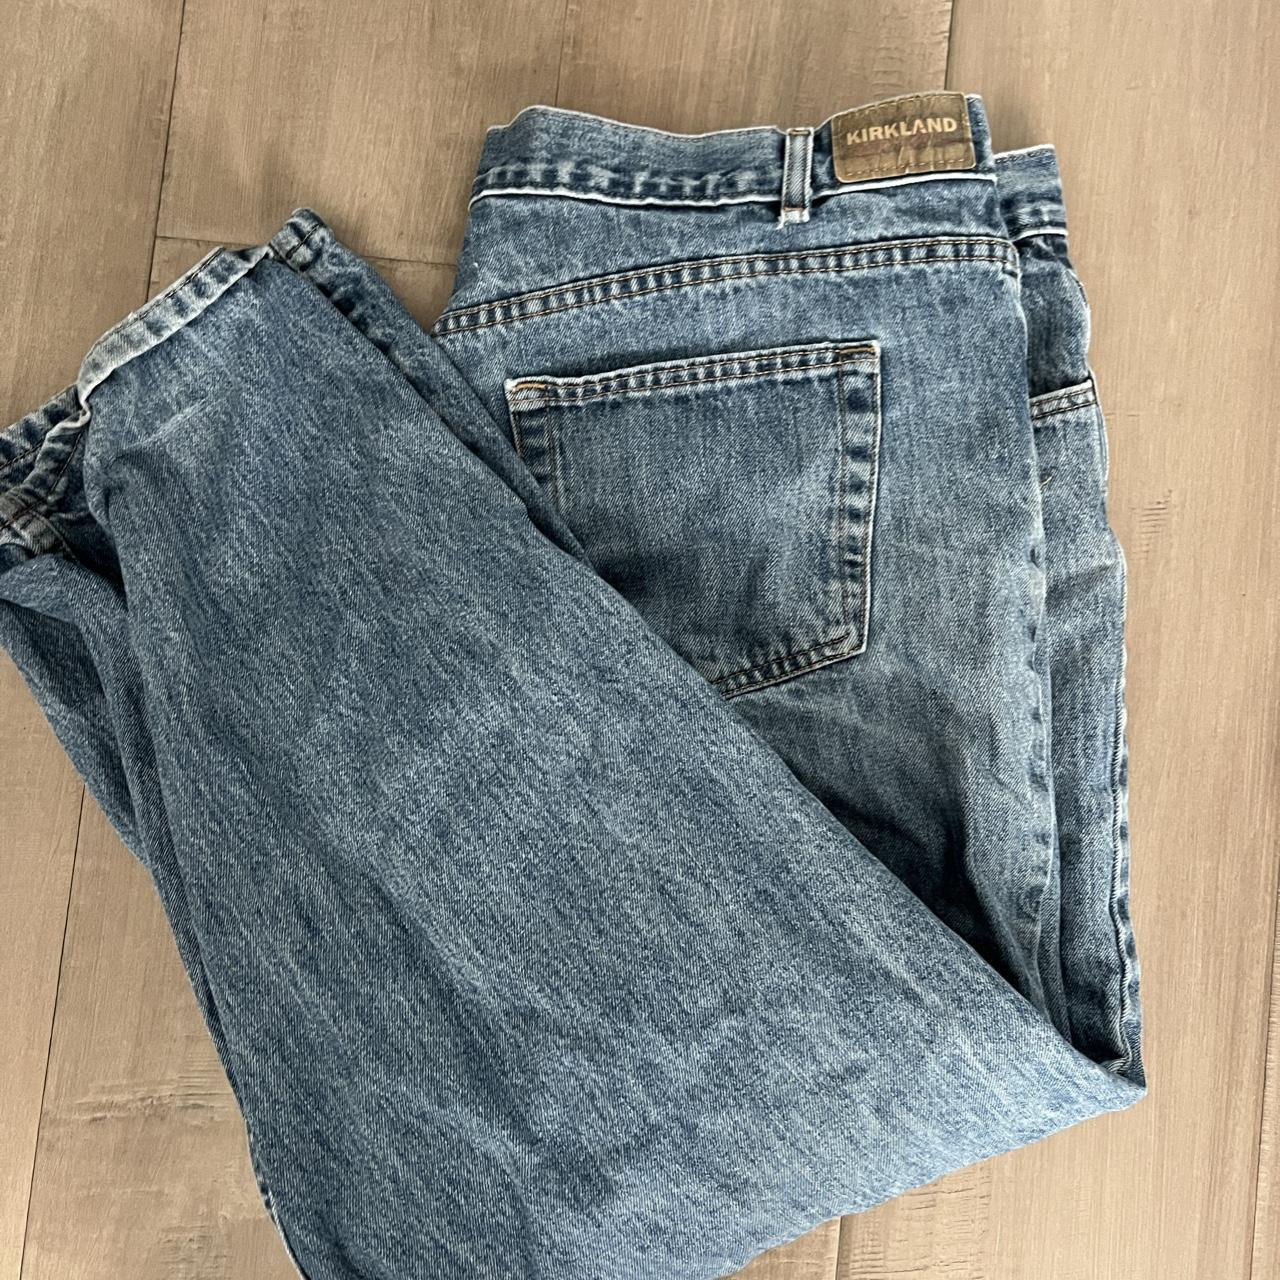 Kirkland Blue Baggy jeans 44x30 Good condition looks... - Depop